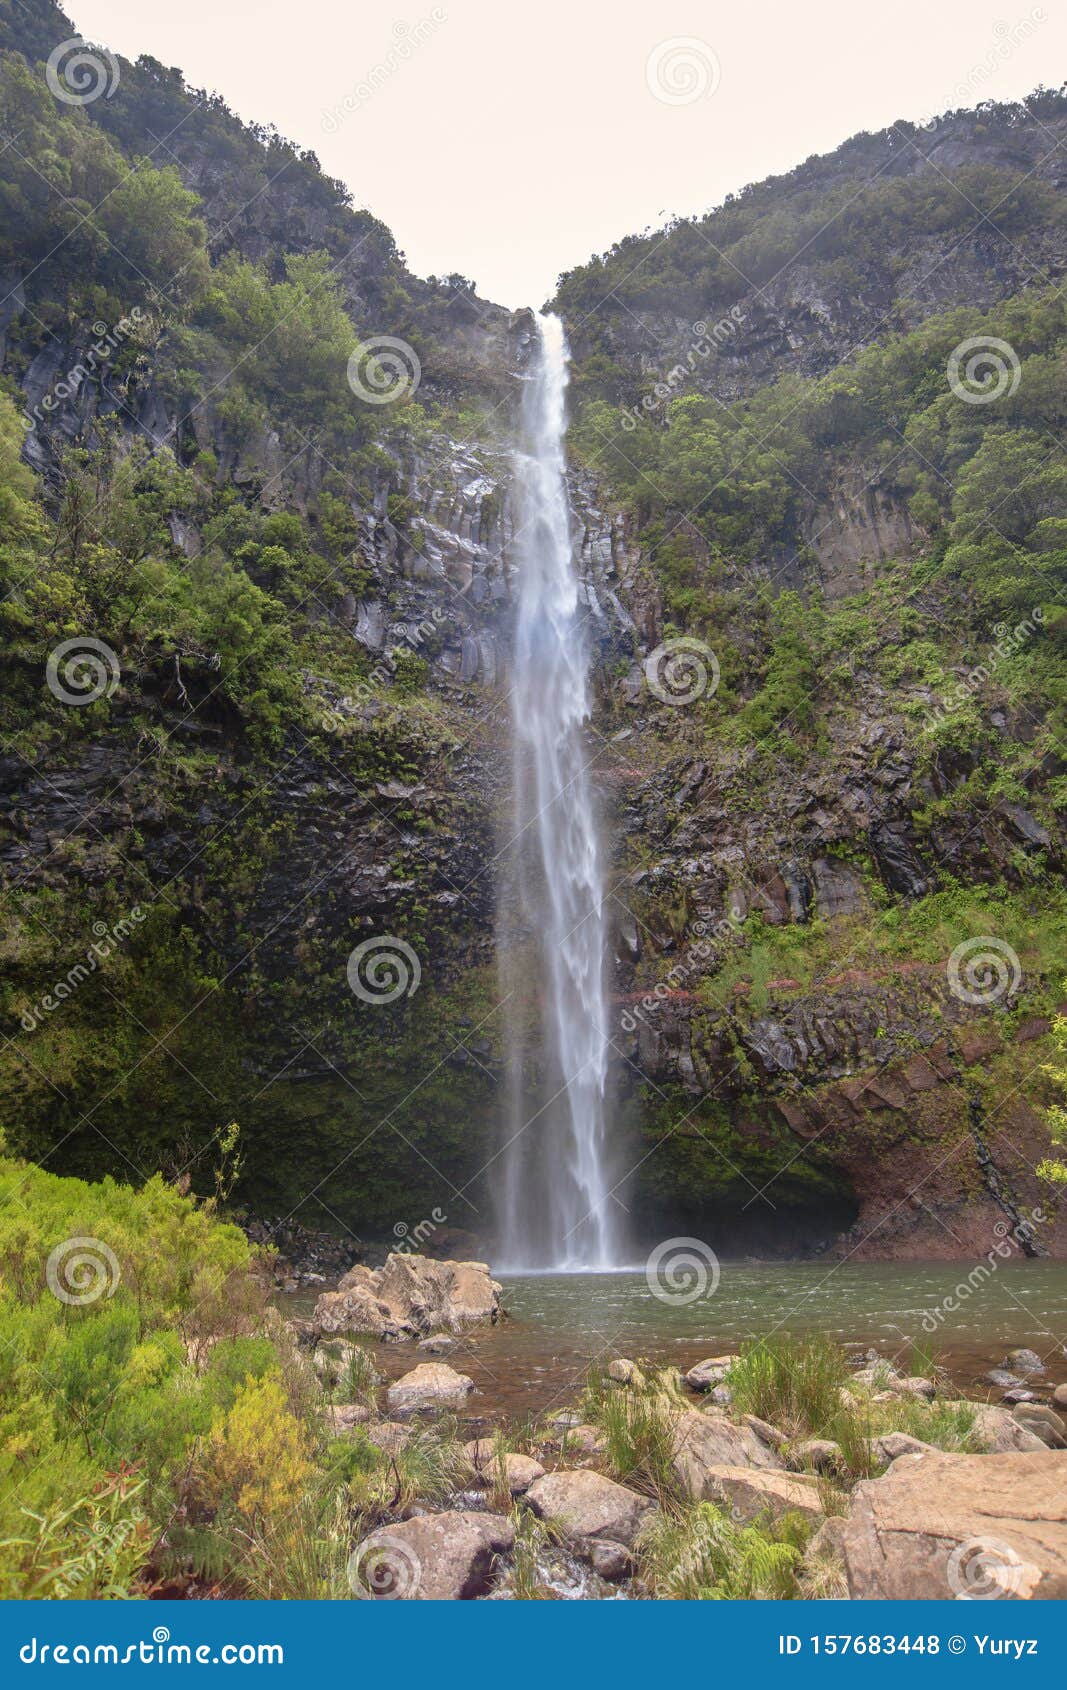 lago vento waterfall